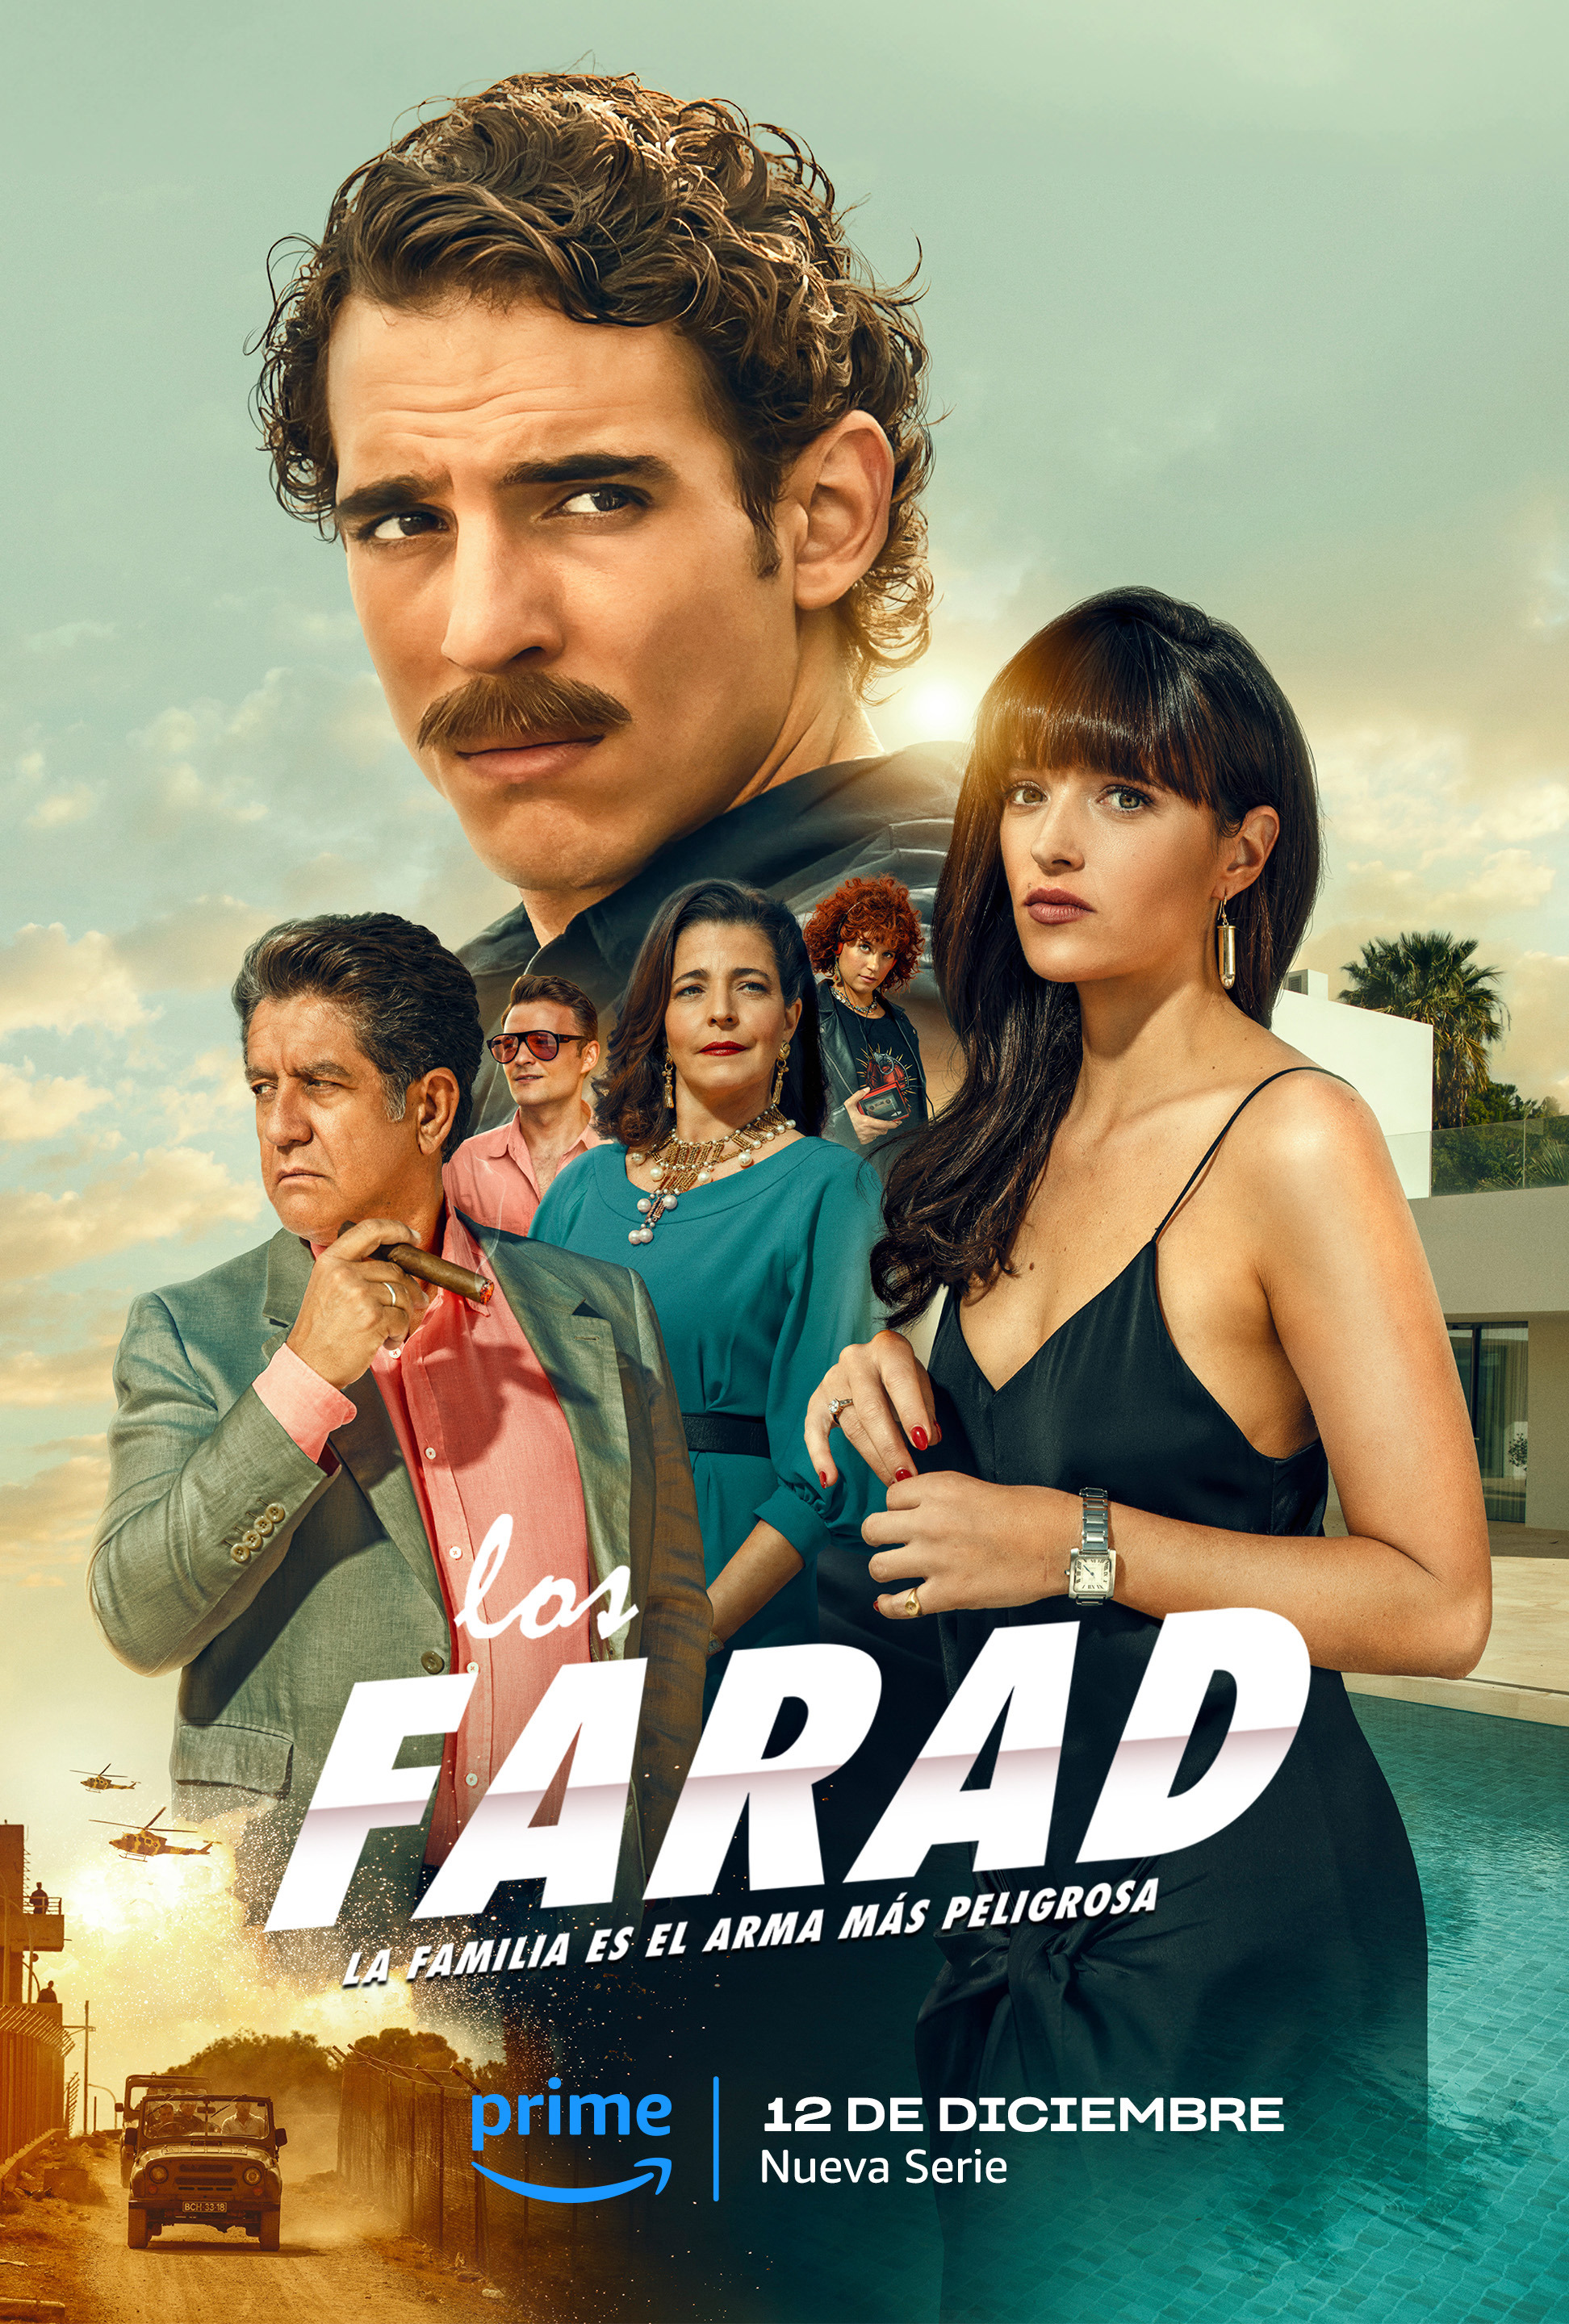 Mega Sized TV Poster Image for Los Farad 